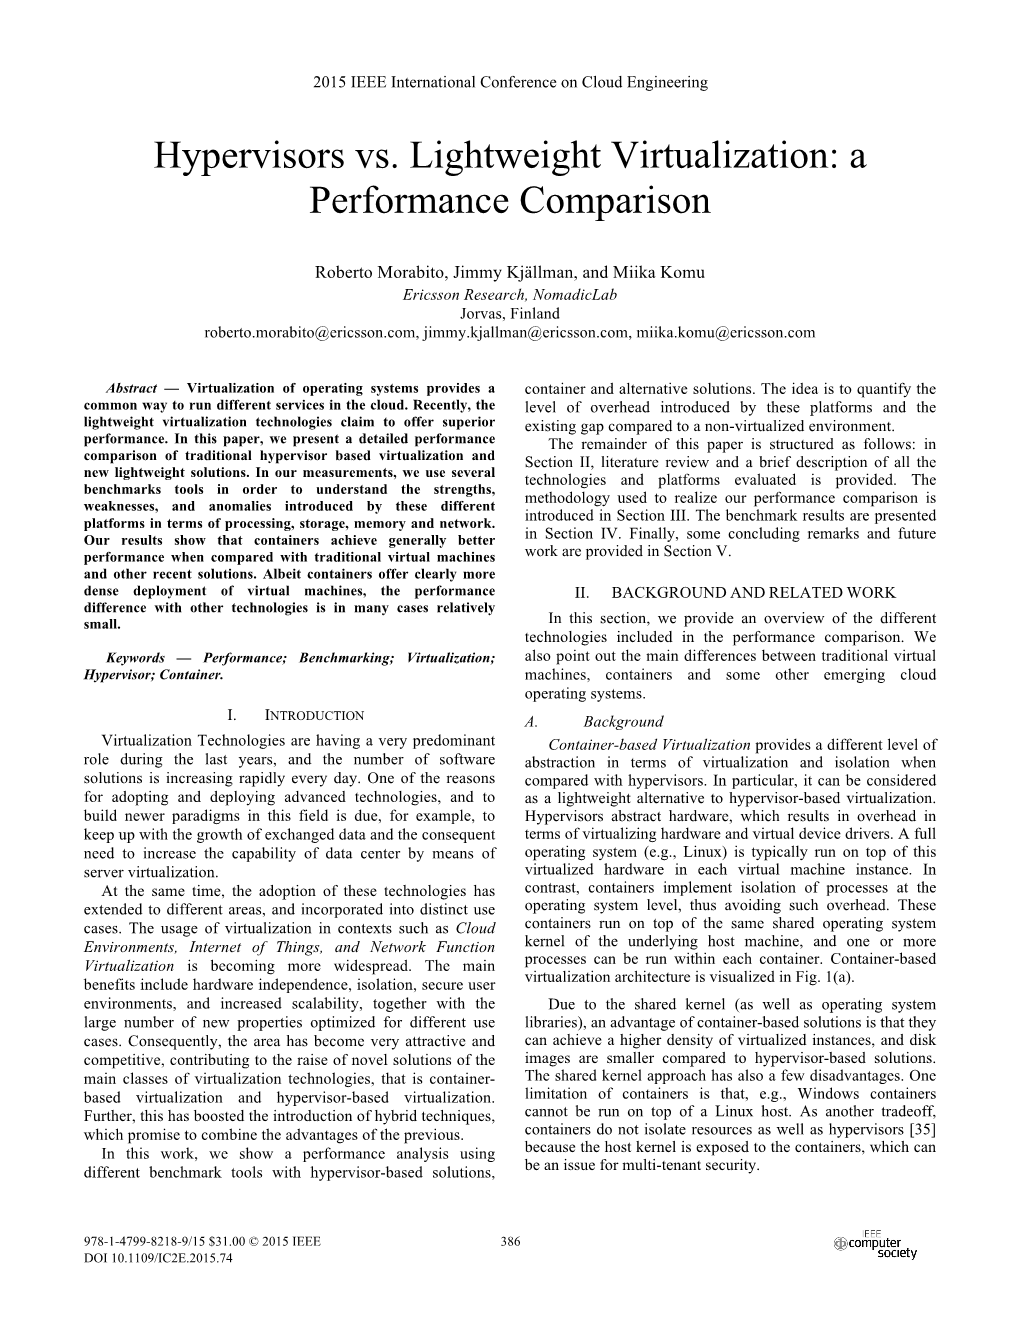 Hypervisors Vs. Lightweight Virtualization: a Performance Comparison